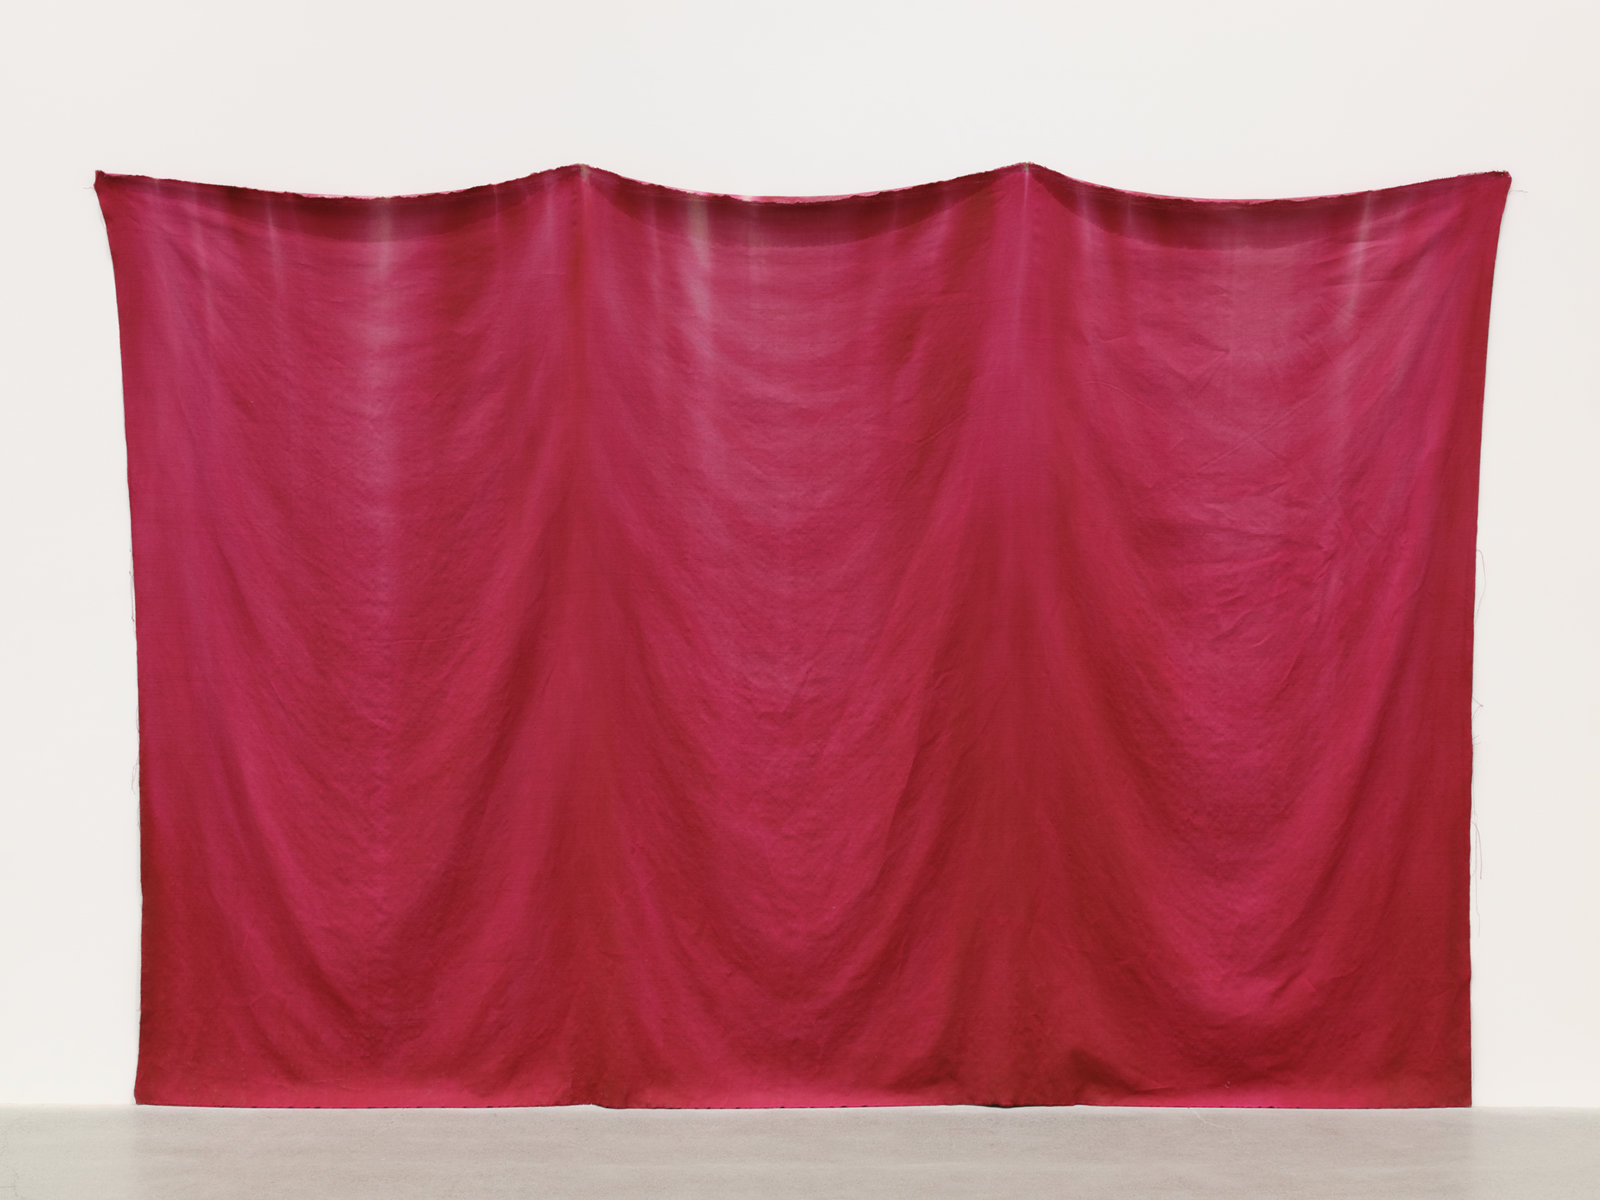 Abbas Akhavan, curtain, 2021, water based pigment on linen, 95 x 101 in. (241 x 257 cm)